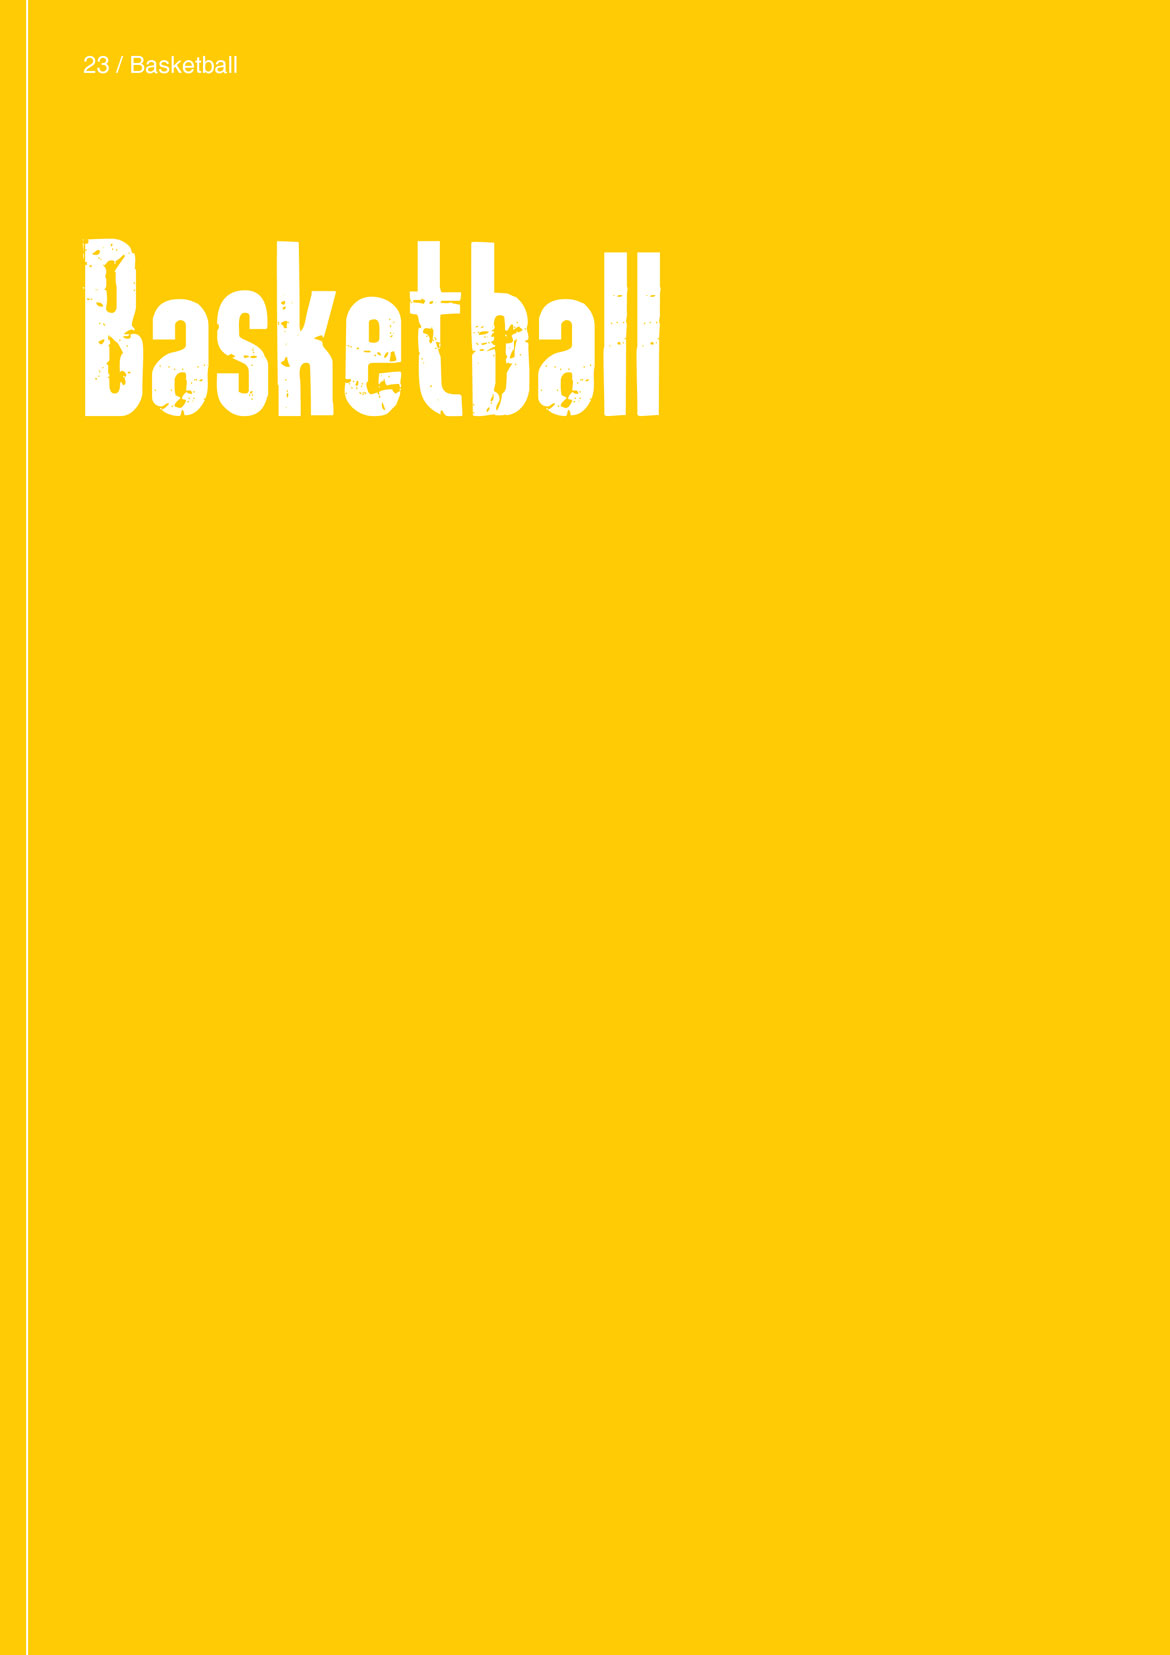 Basketball Apparel